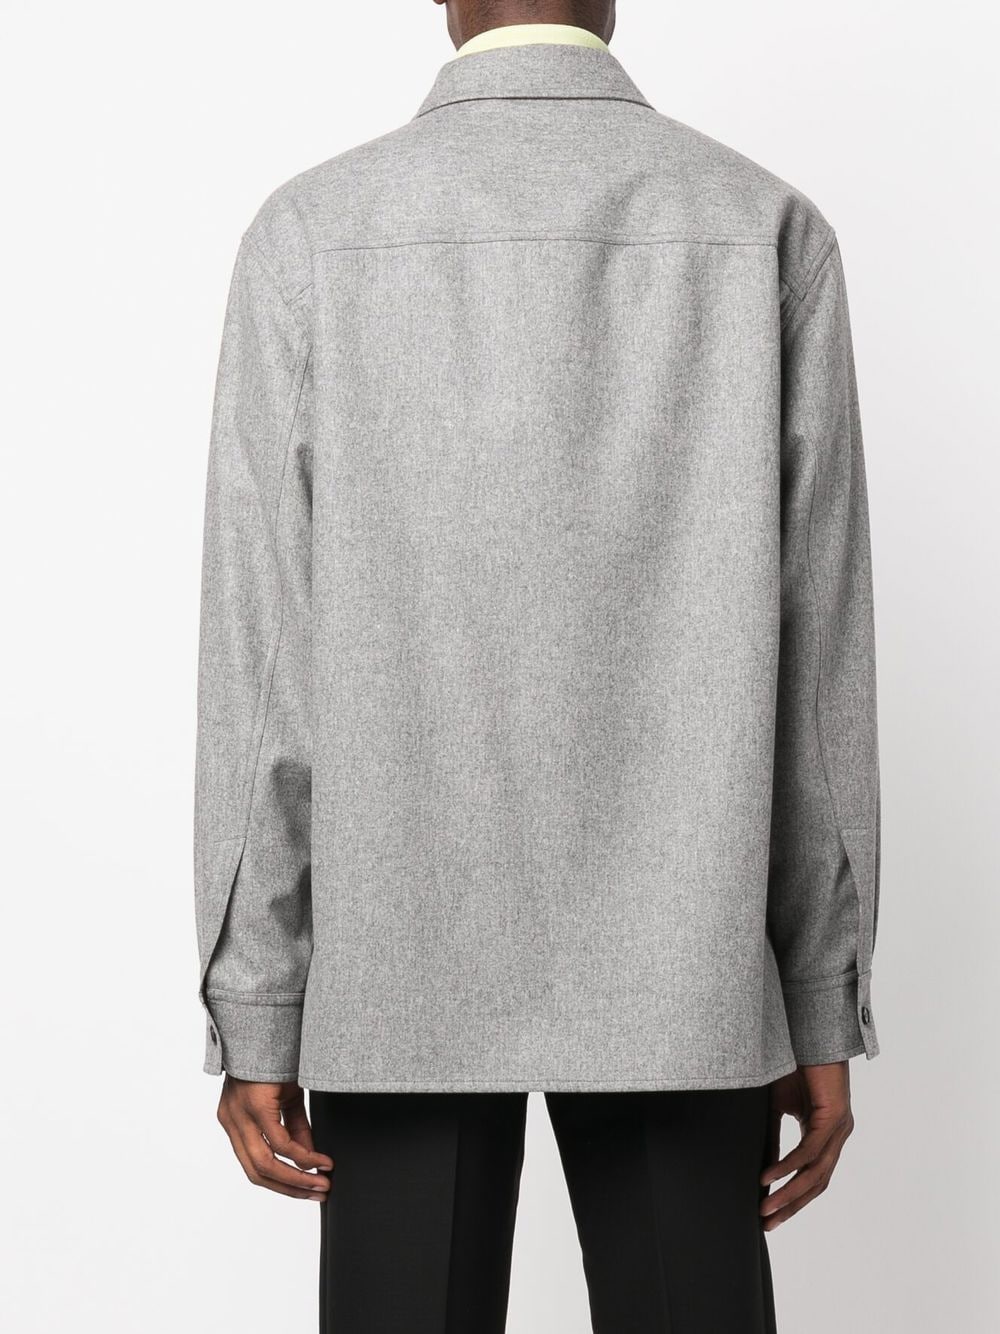 Jil Sander long-sleeve Wool Shirt Jacket - Farfetch